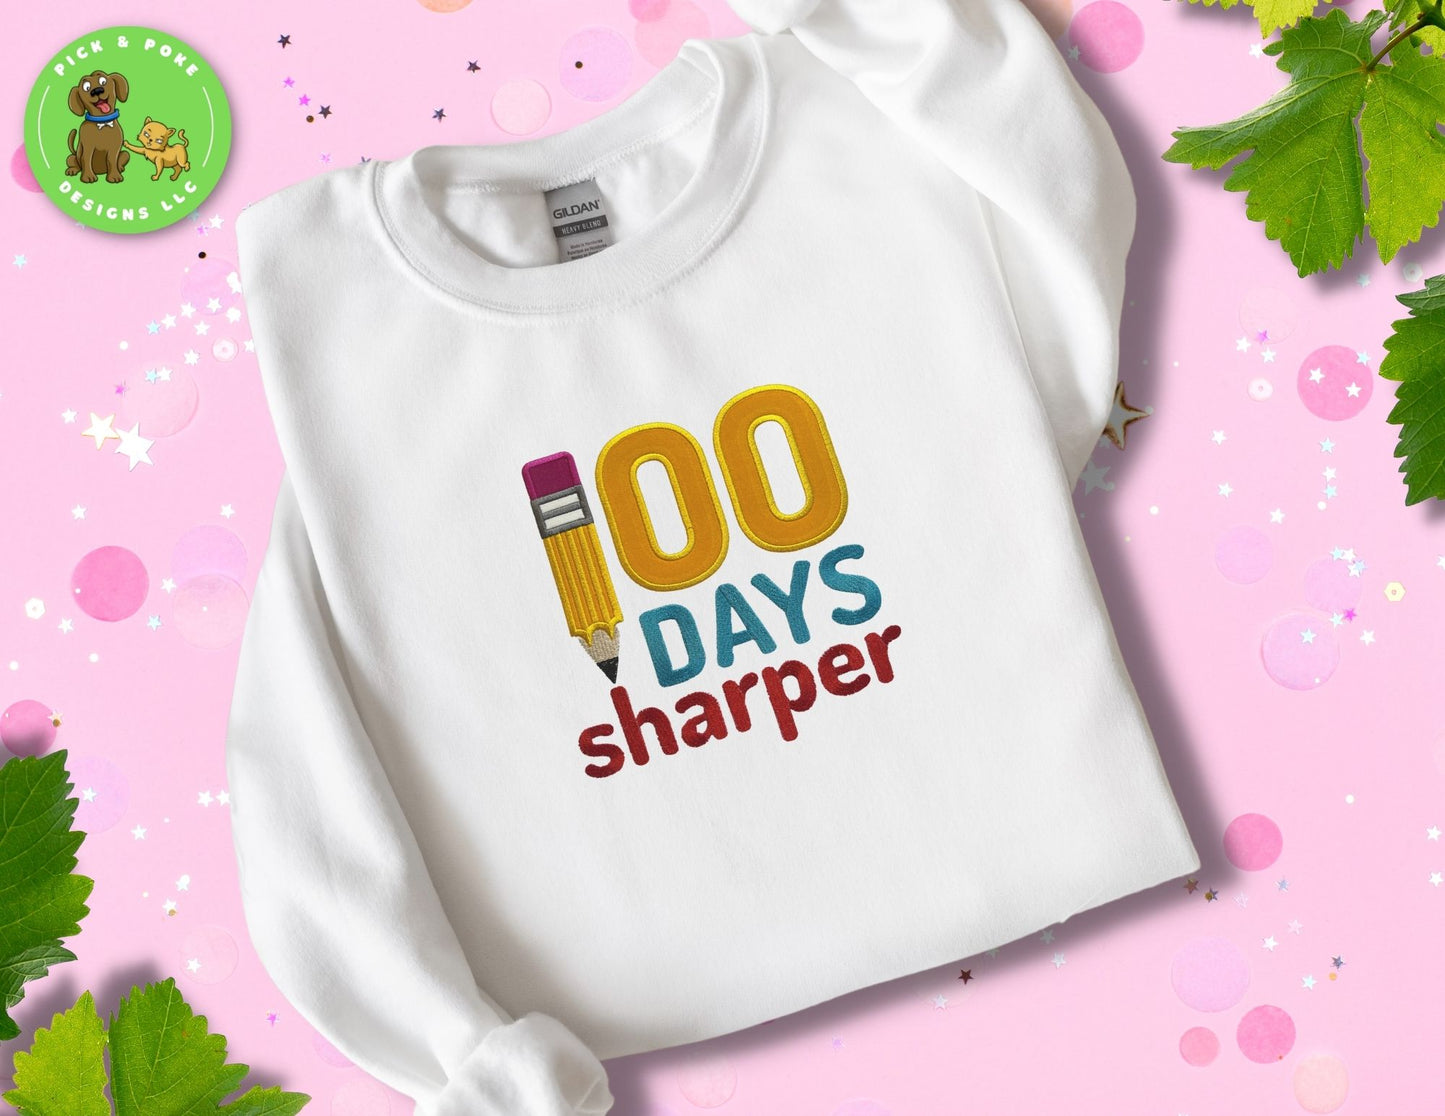 White crewneck sweatshirt embroidered with the phrase 100 Days sharper